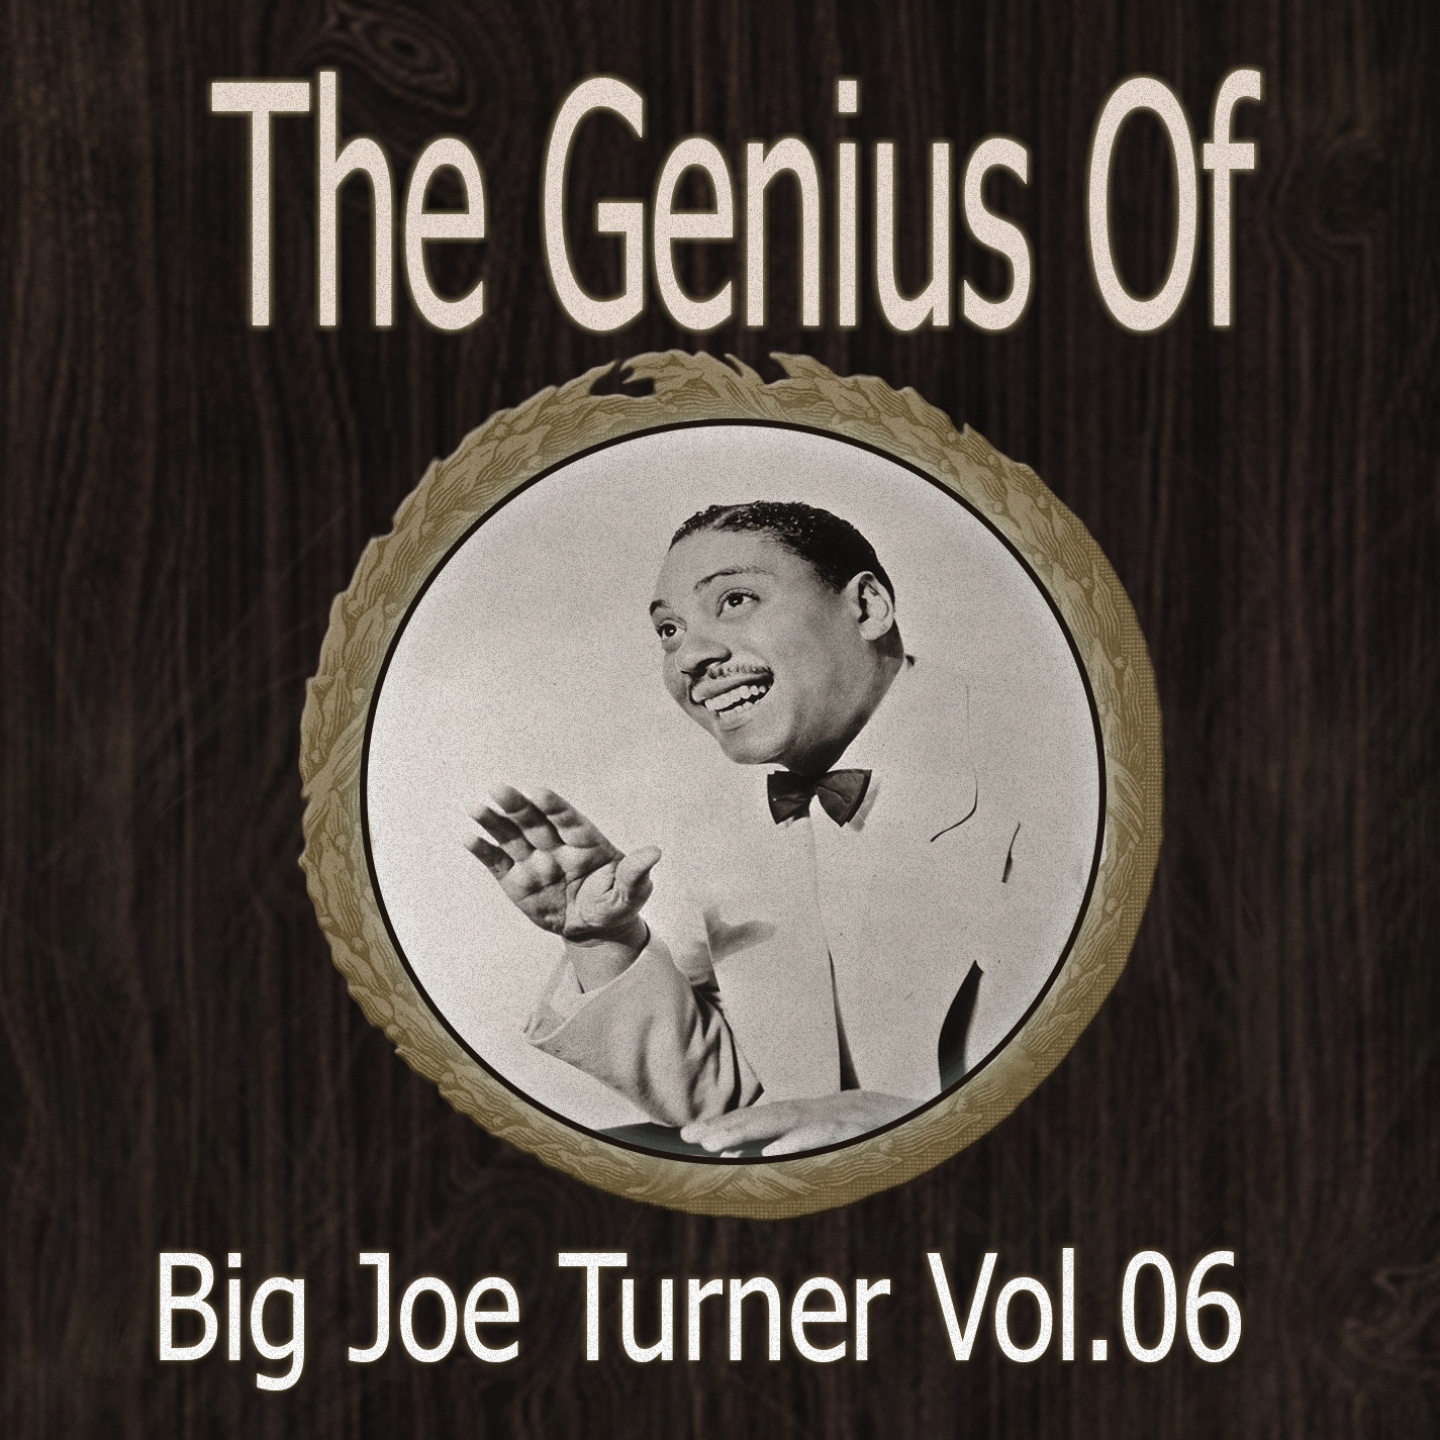 The Genius of Big Joe Turner Vol 06